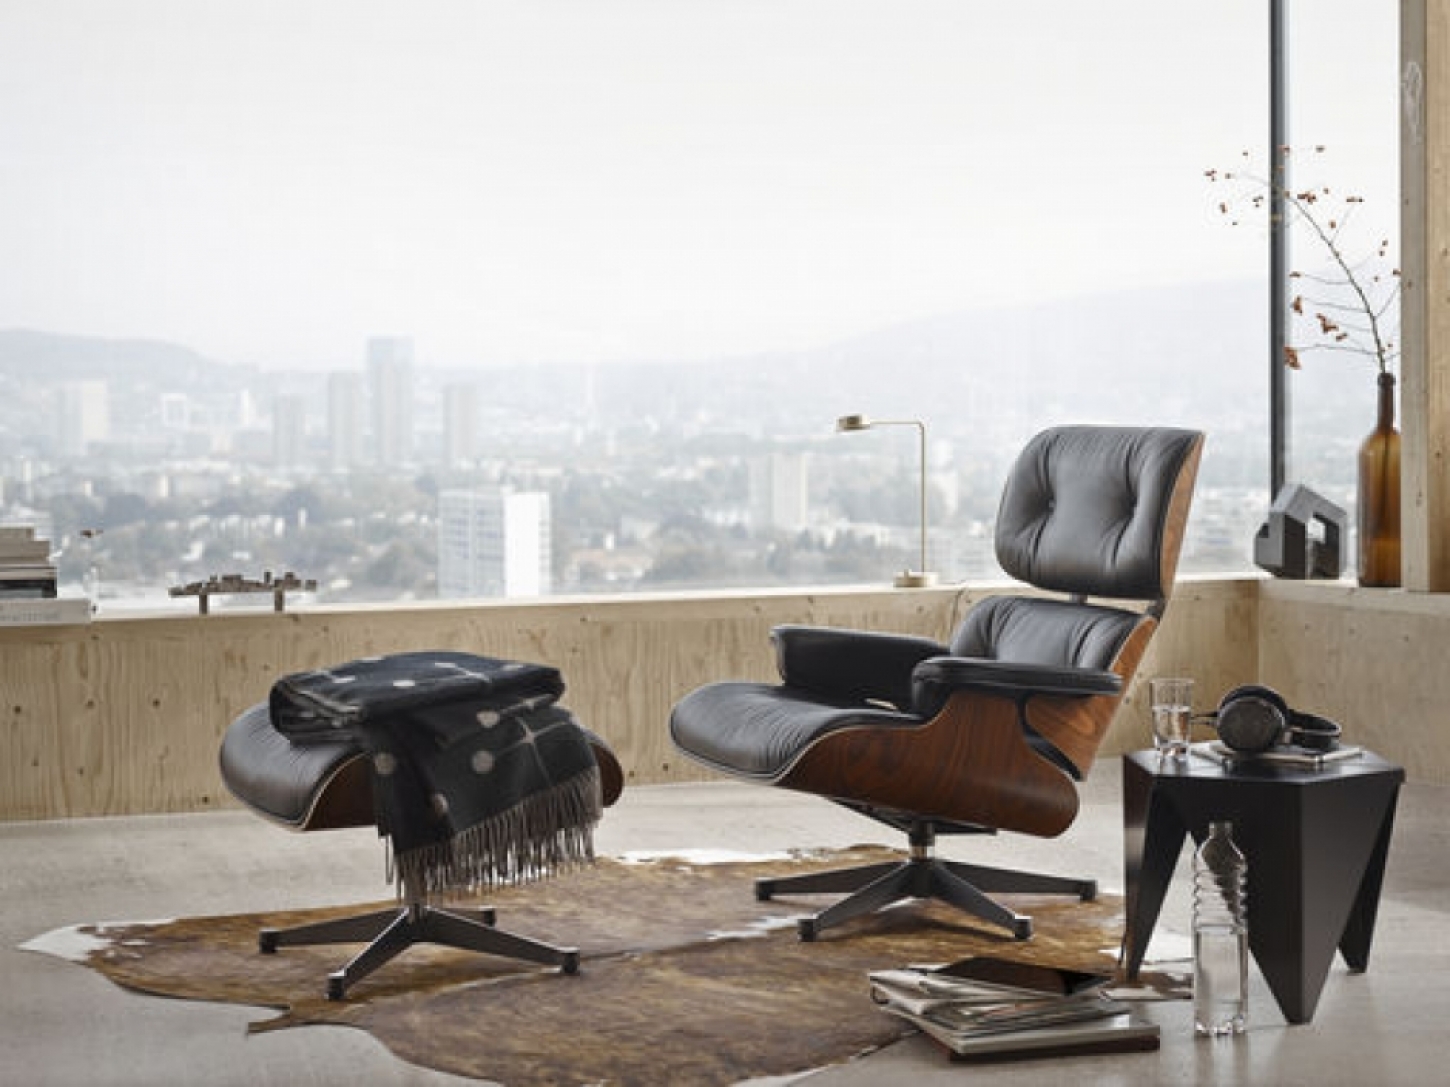 Ook de Lounge Chair van Charles & Ray Eames behoort tot de meest gekende designklassiekers.